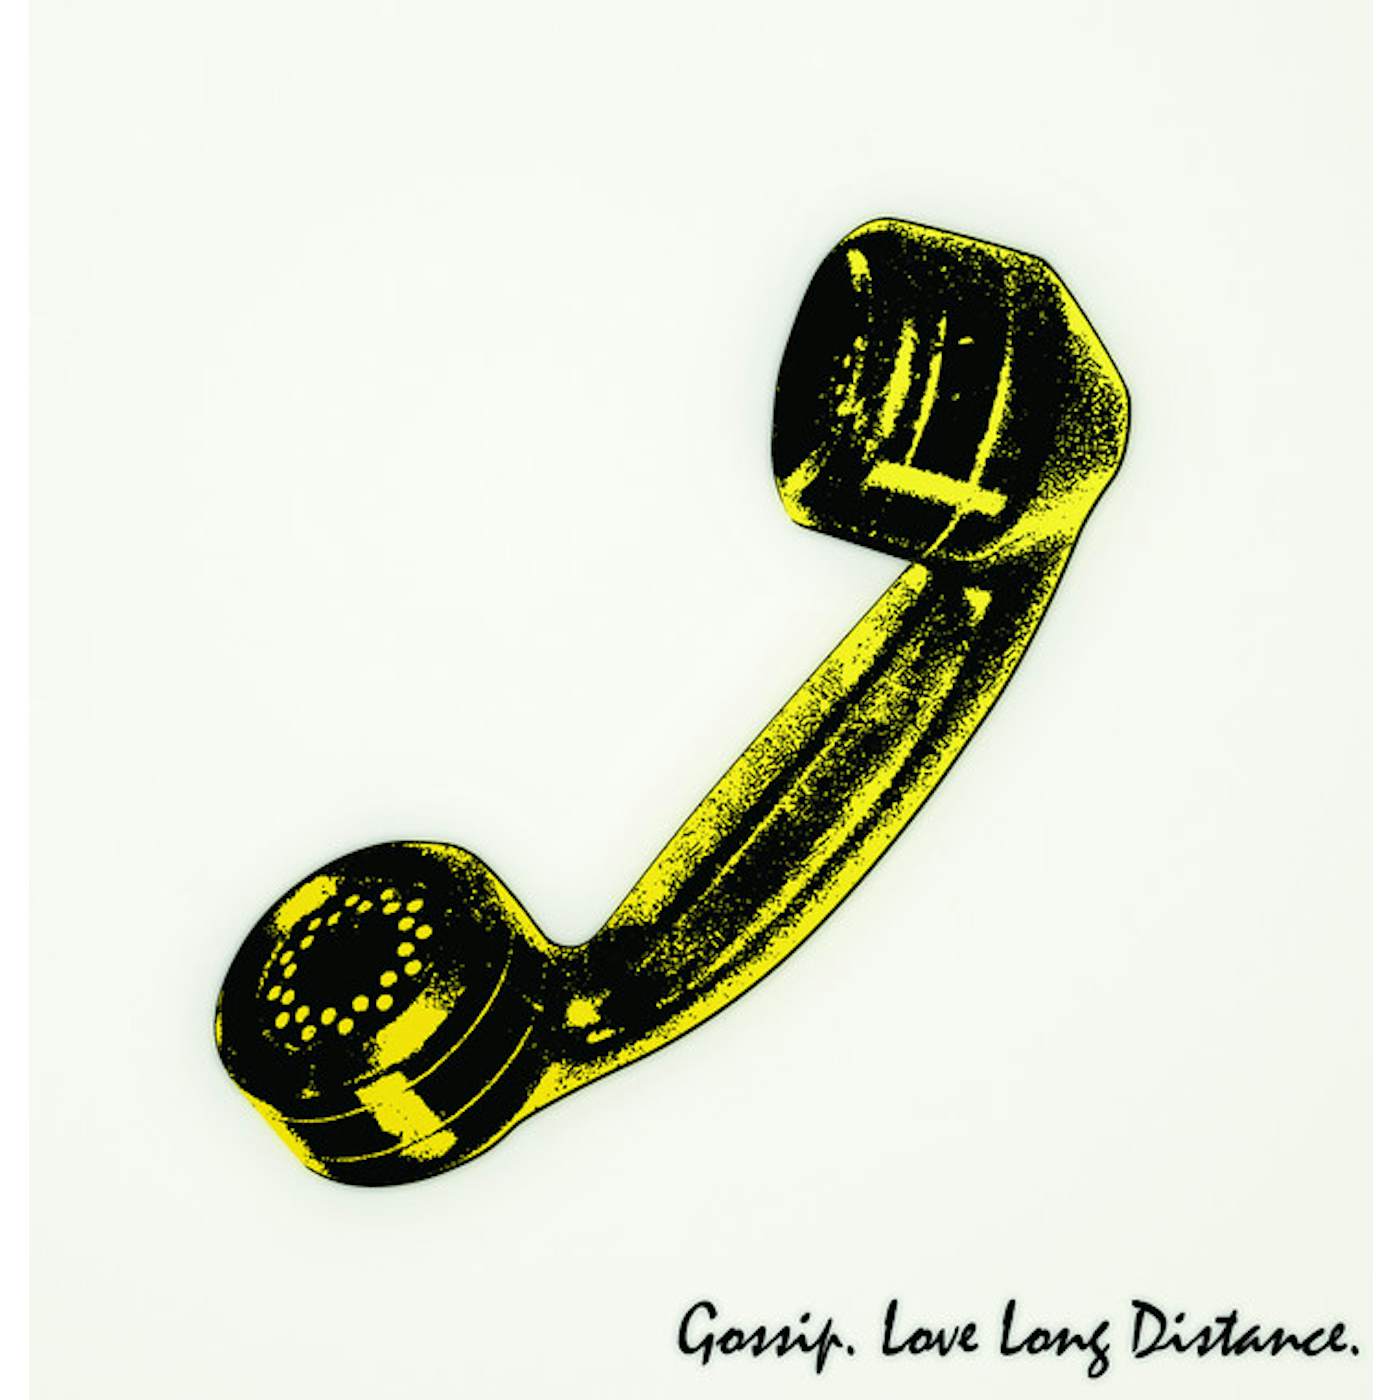 Gossip Love Long Distance Vinyl Record